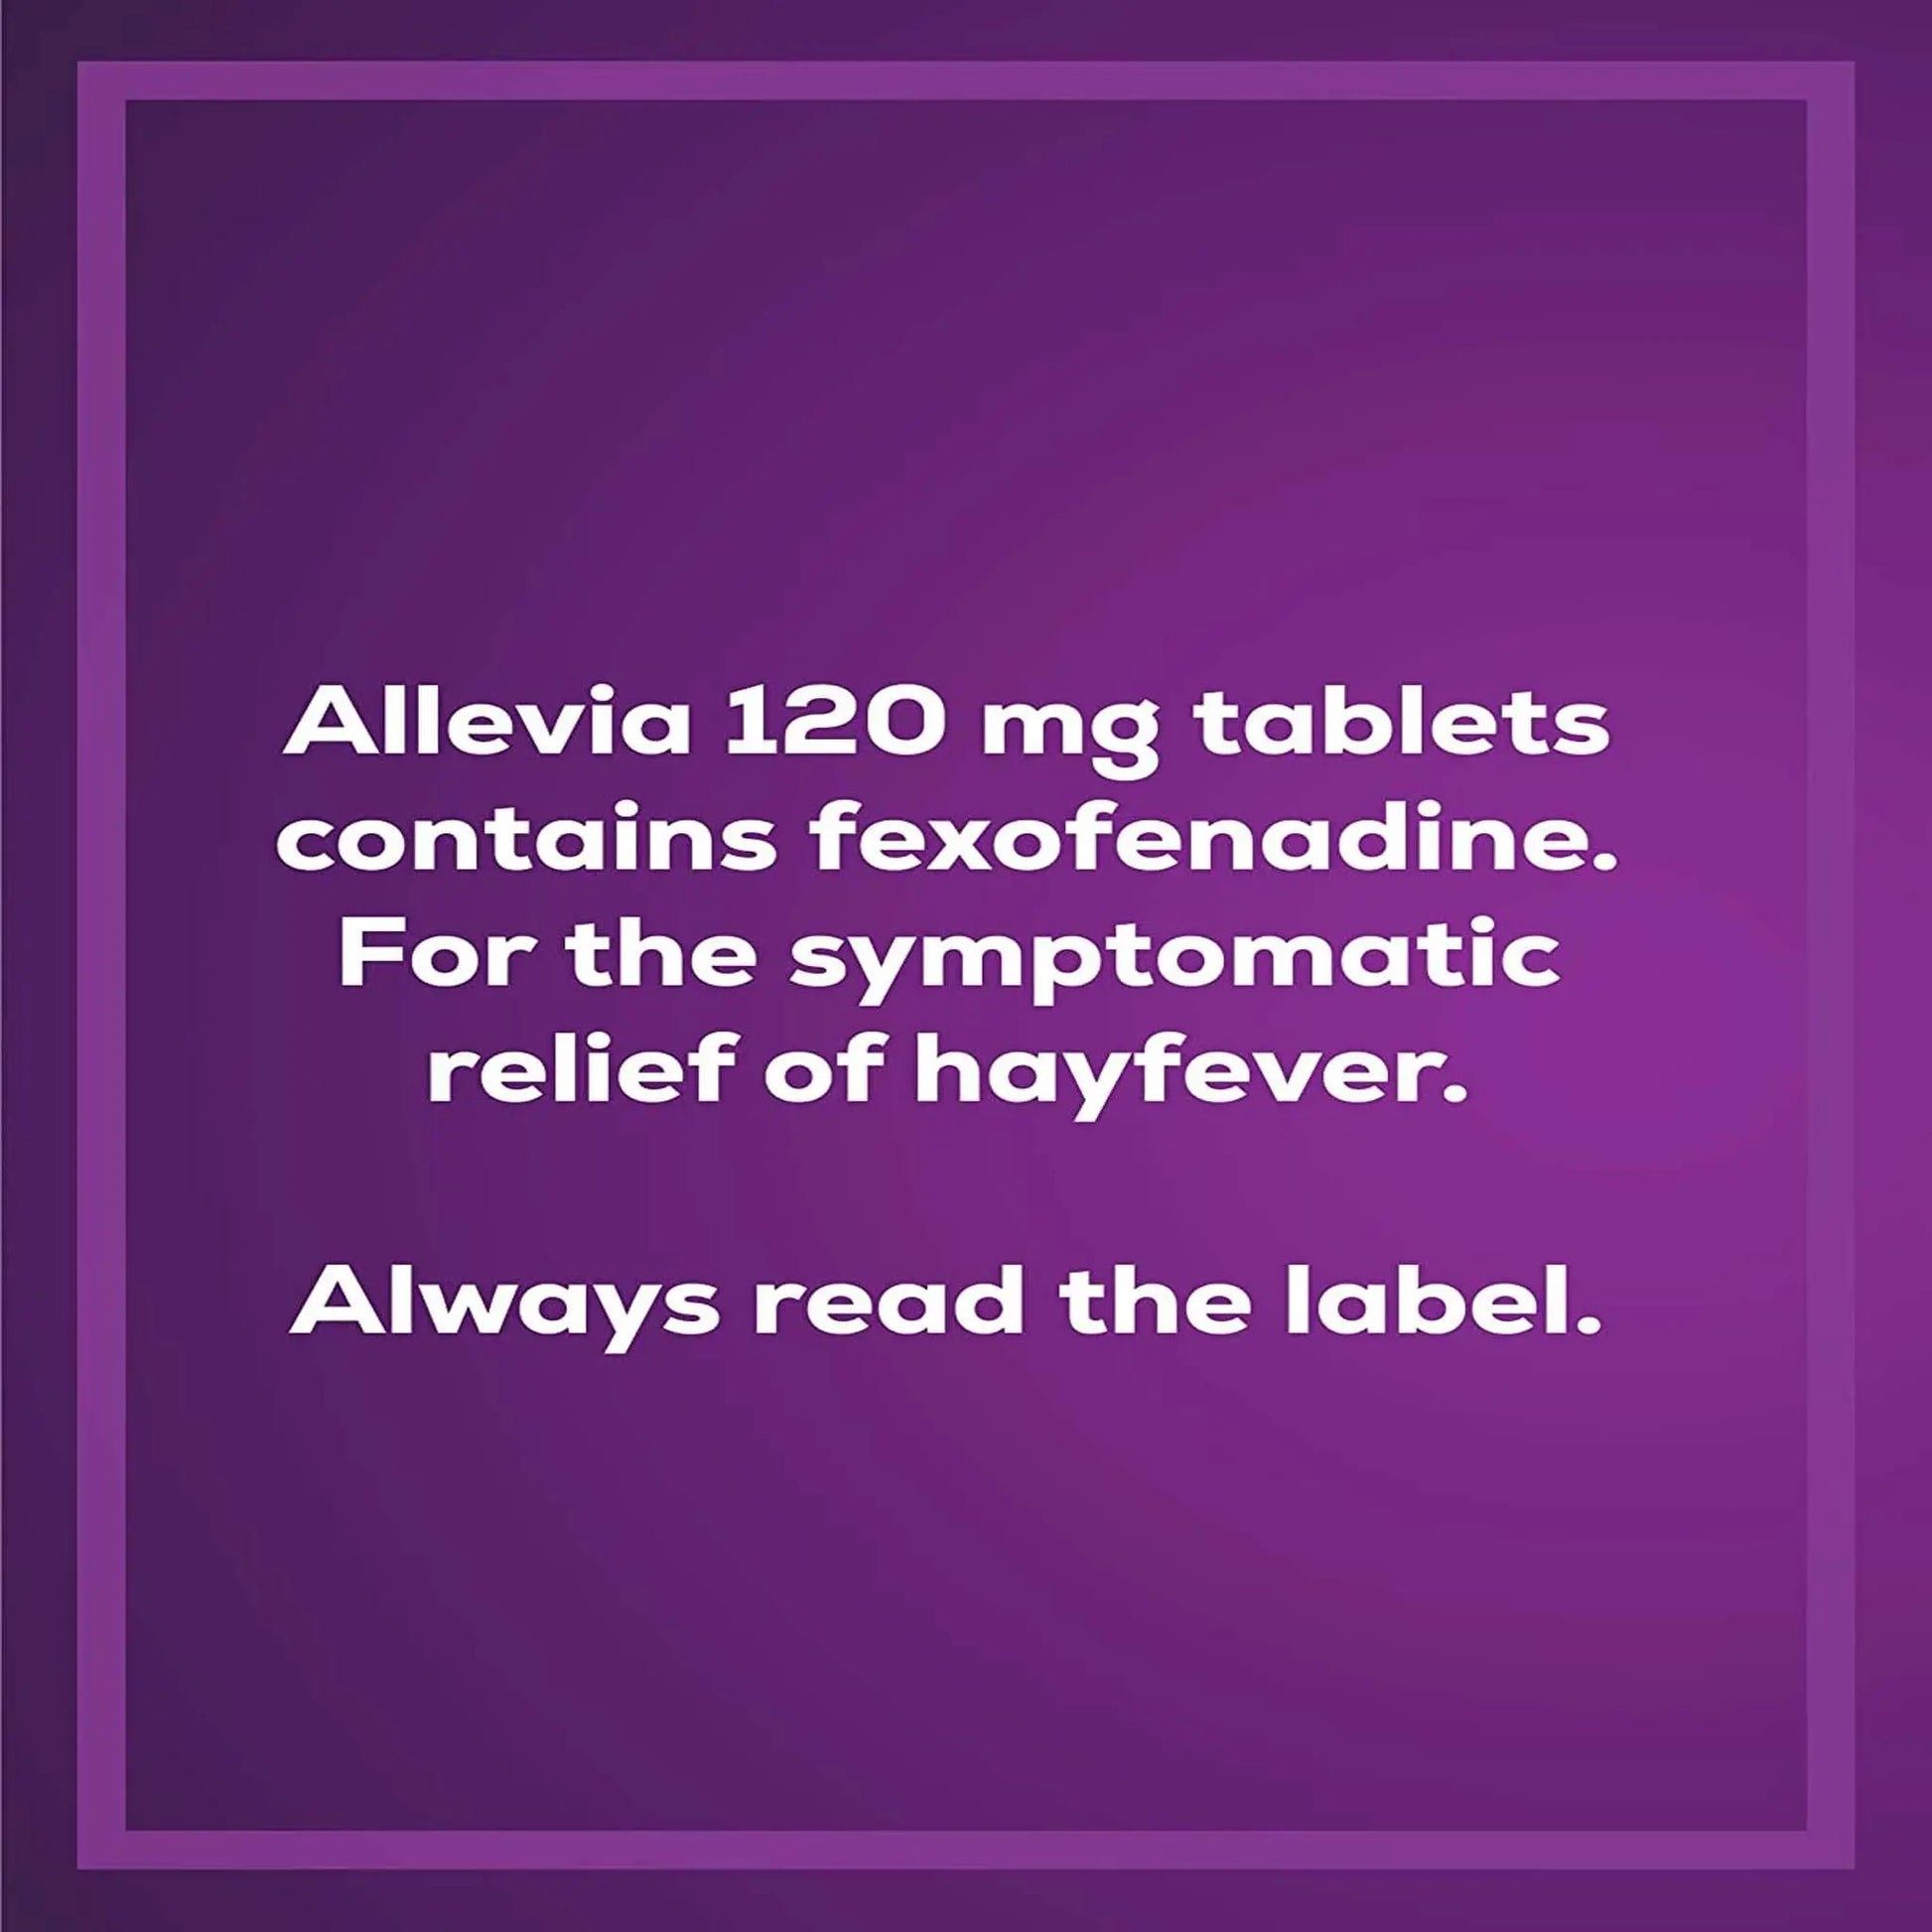 Allevia fexofenadine hayfever allergy 120mg - 15 Tablets - Arc Health Nutrition